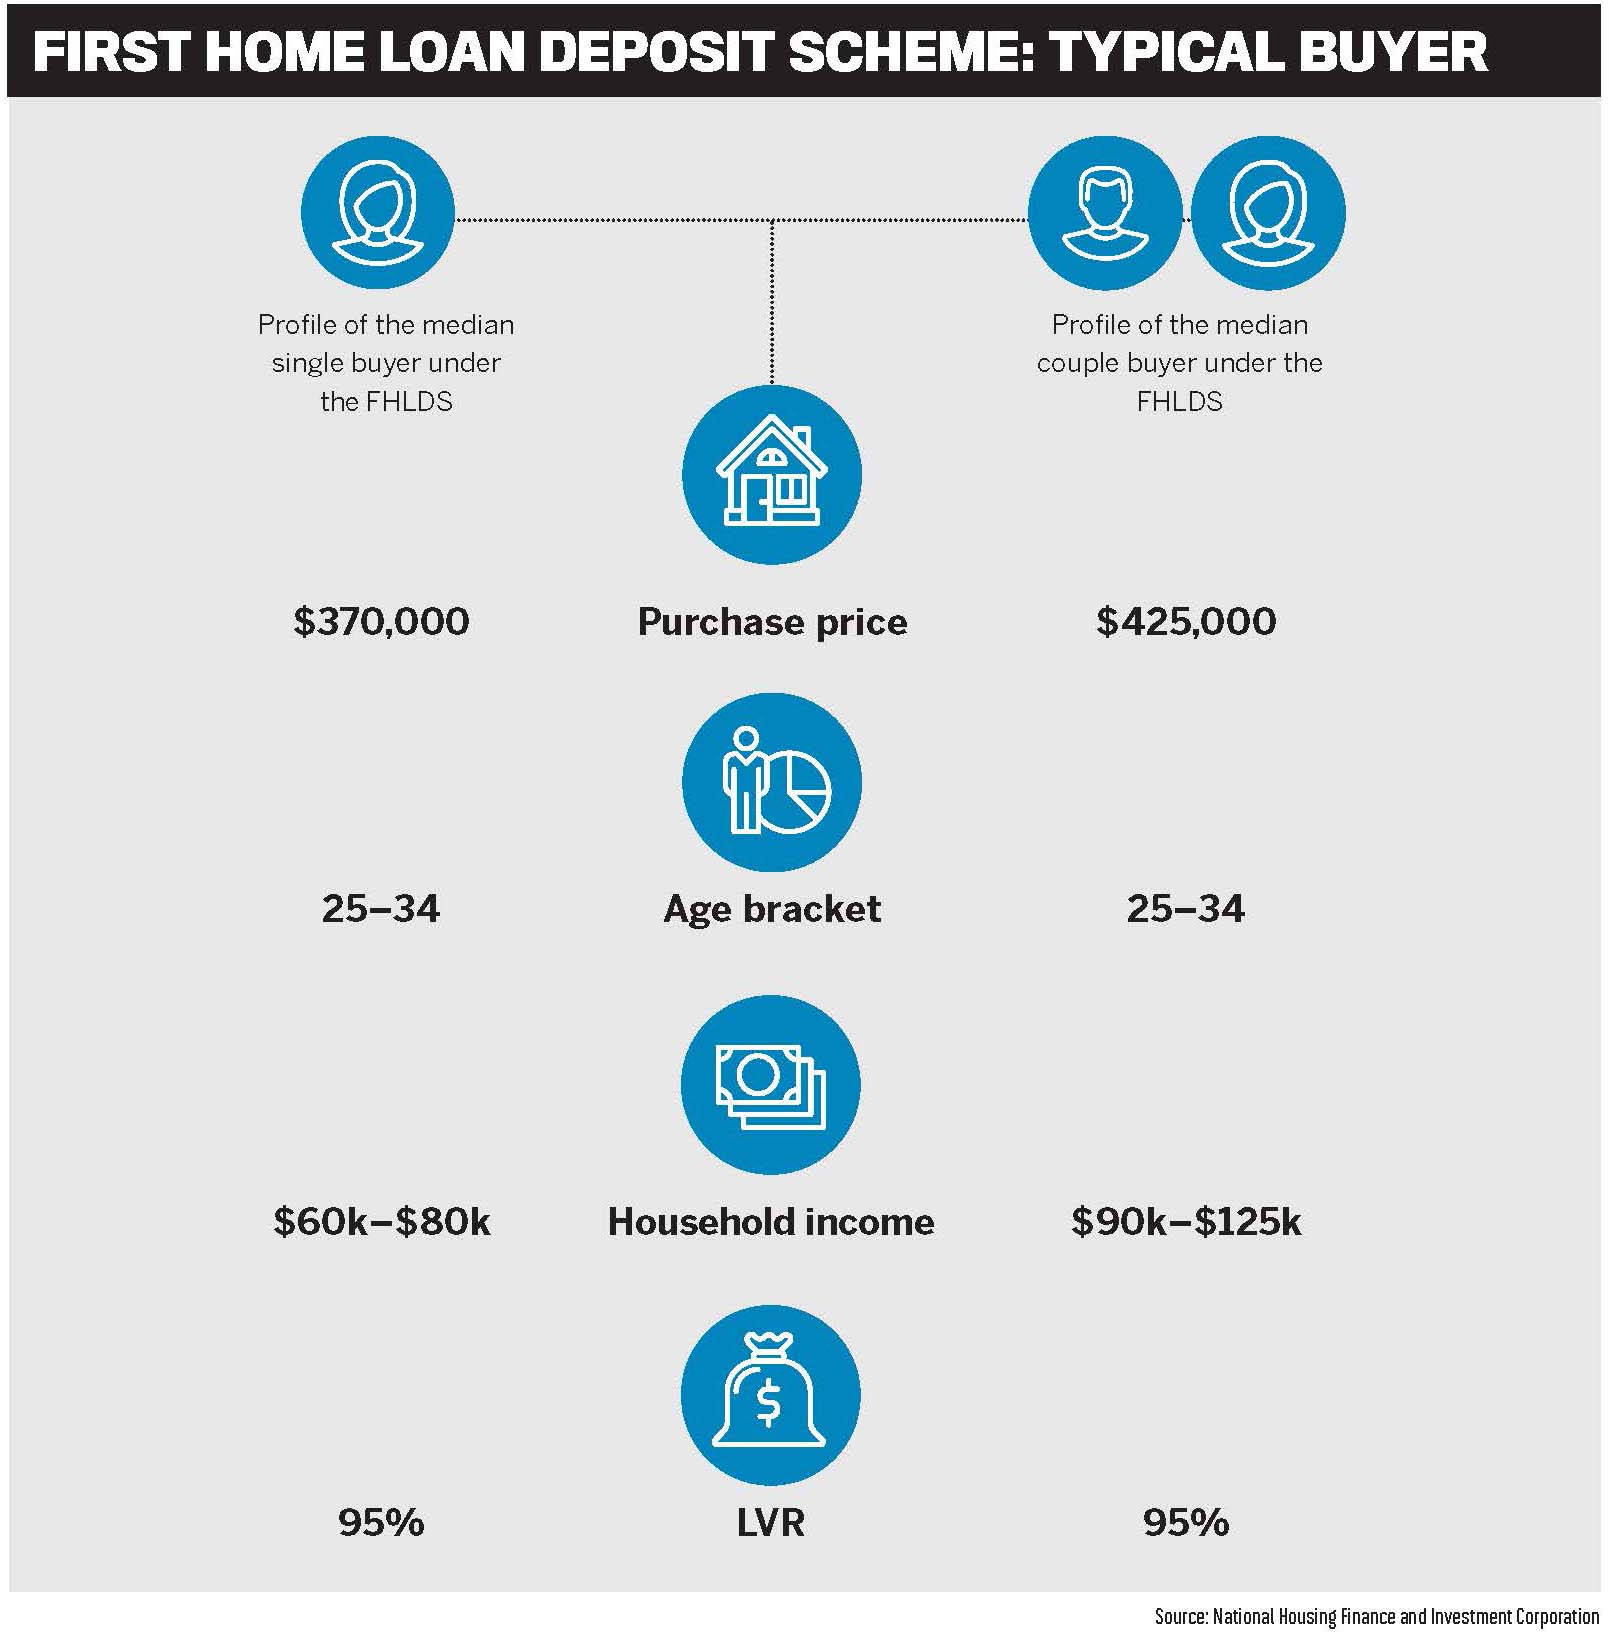 First home loan deposit scheme: Typical buyer